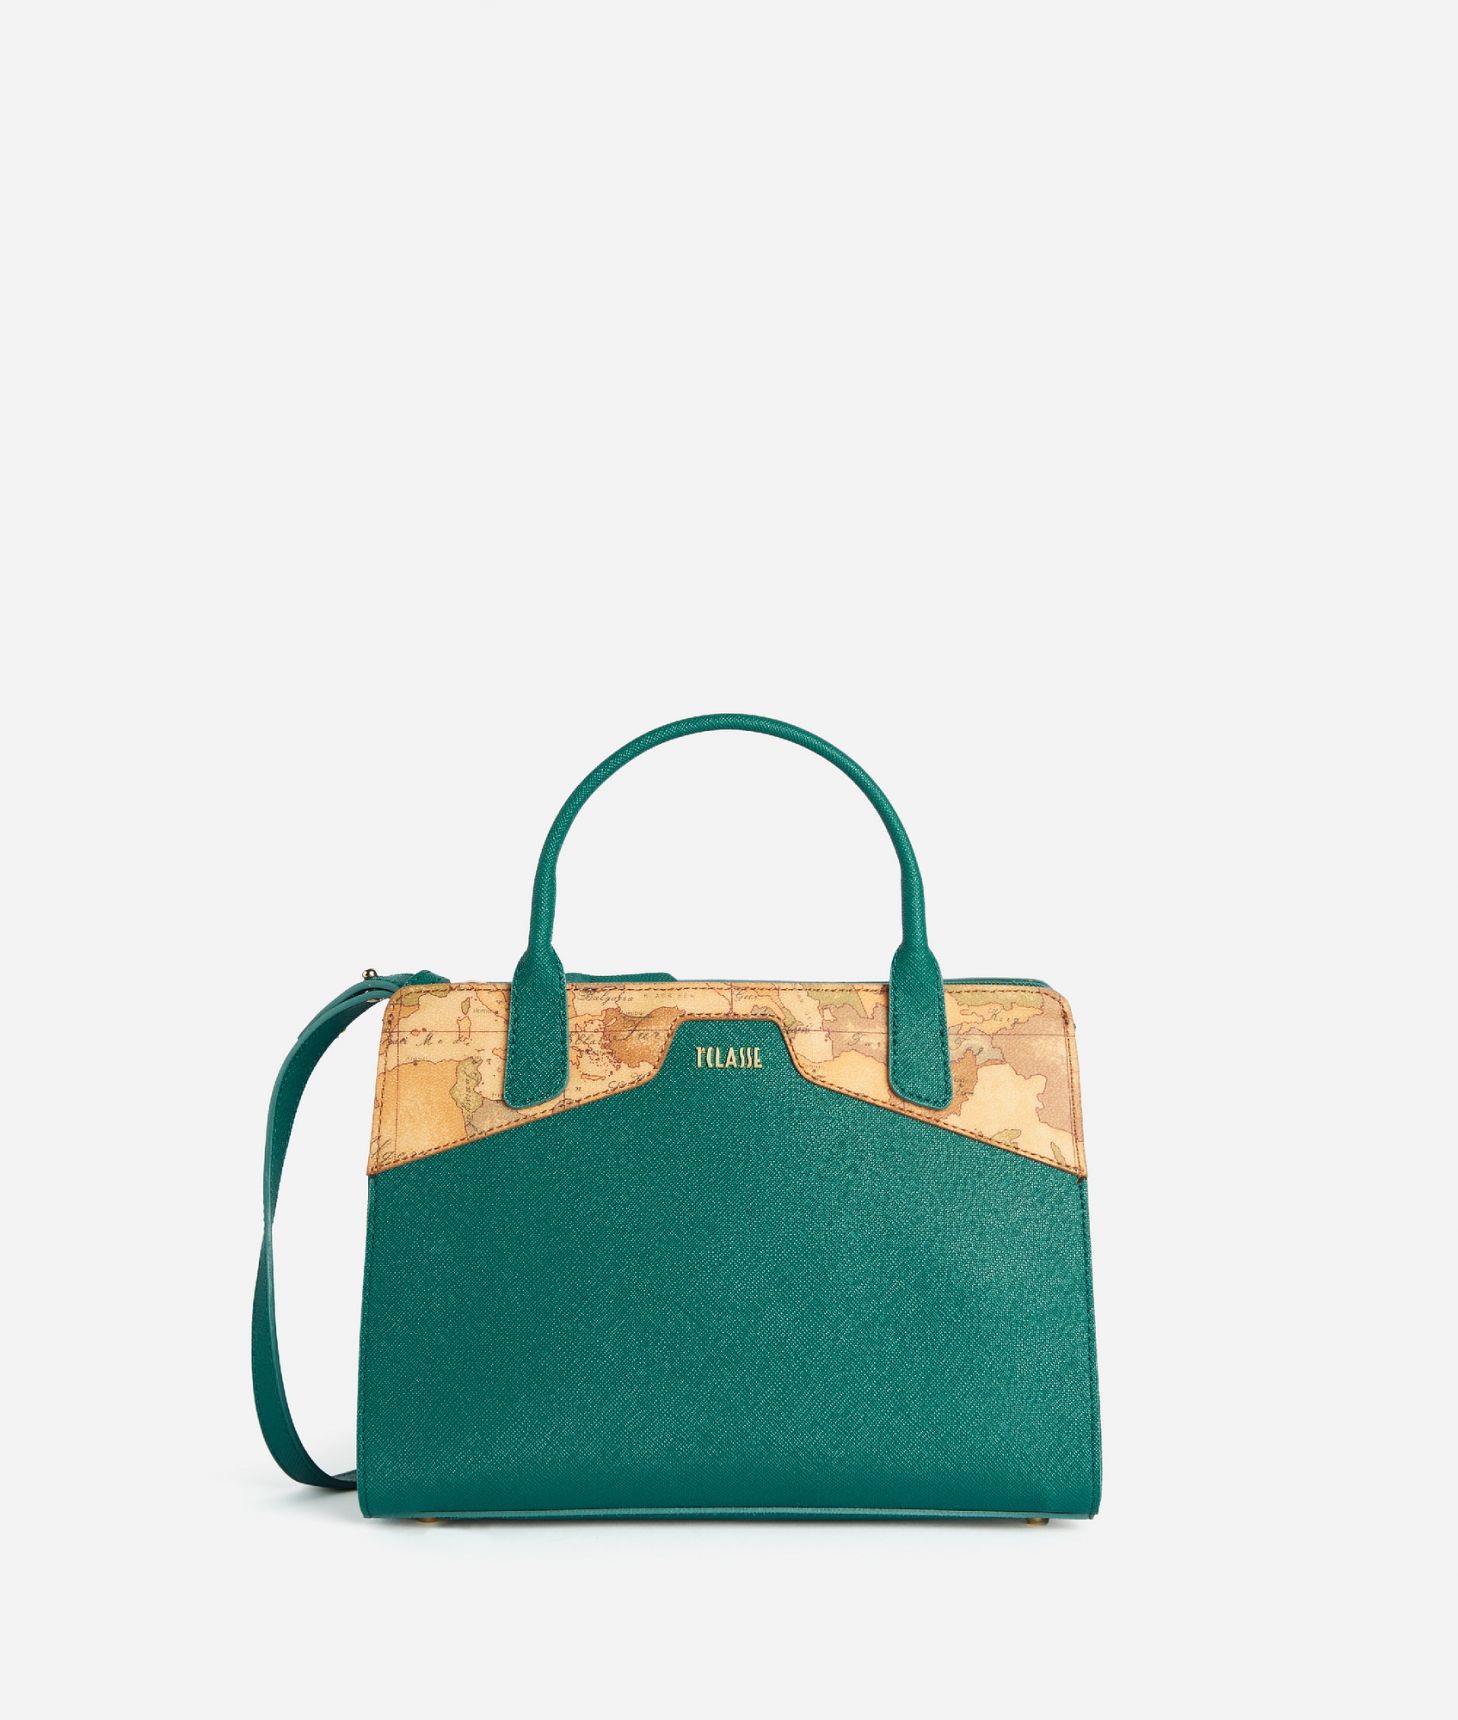 Glam City small handbag Emerald Green,front